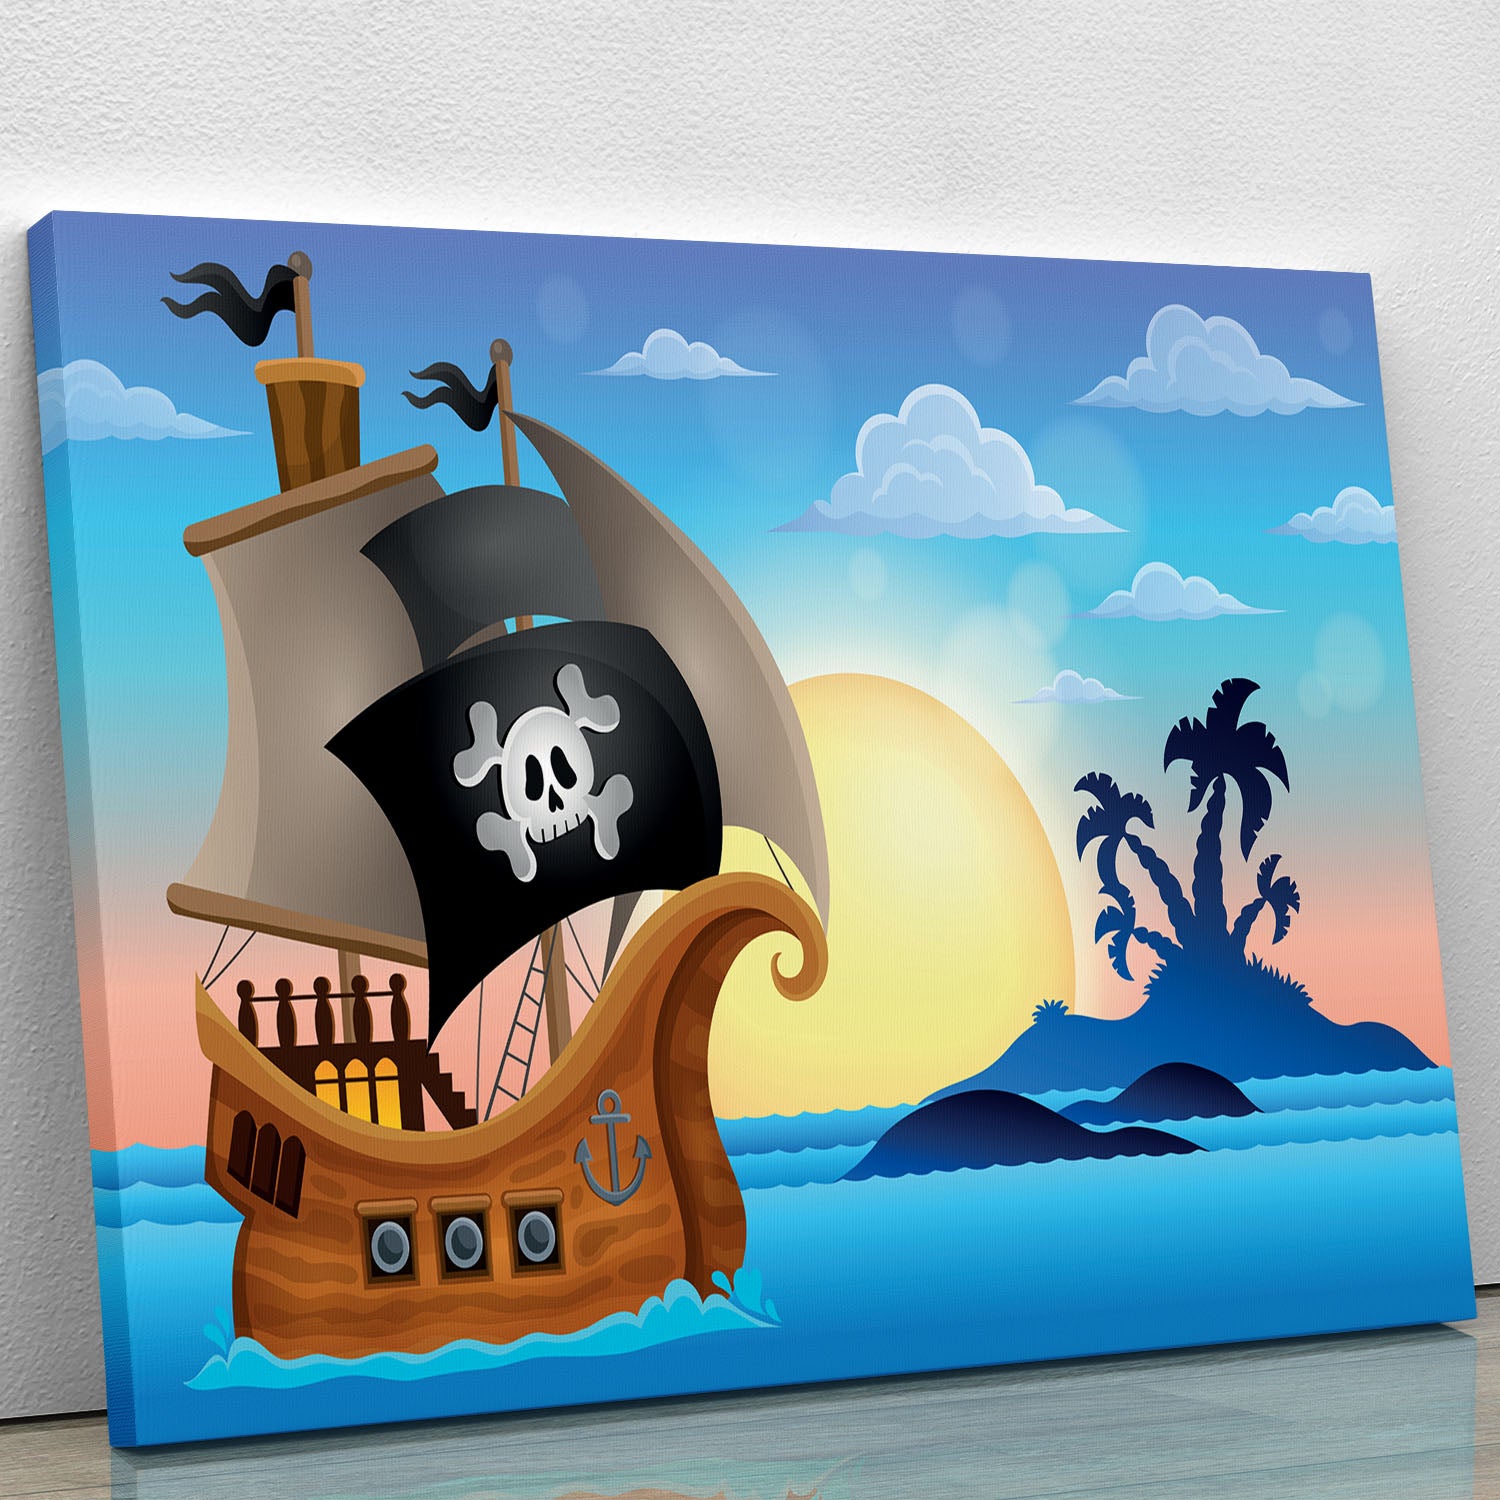 Pirate ship near small island 4 Canvas Print or Poster - Canvas Art Rocks - 1